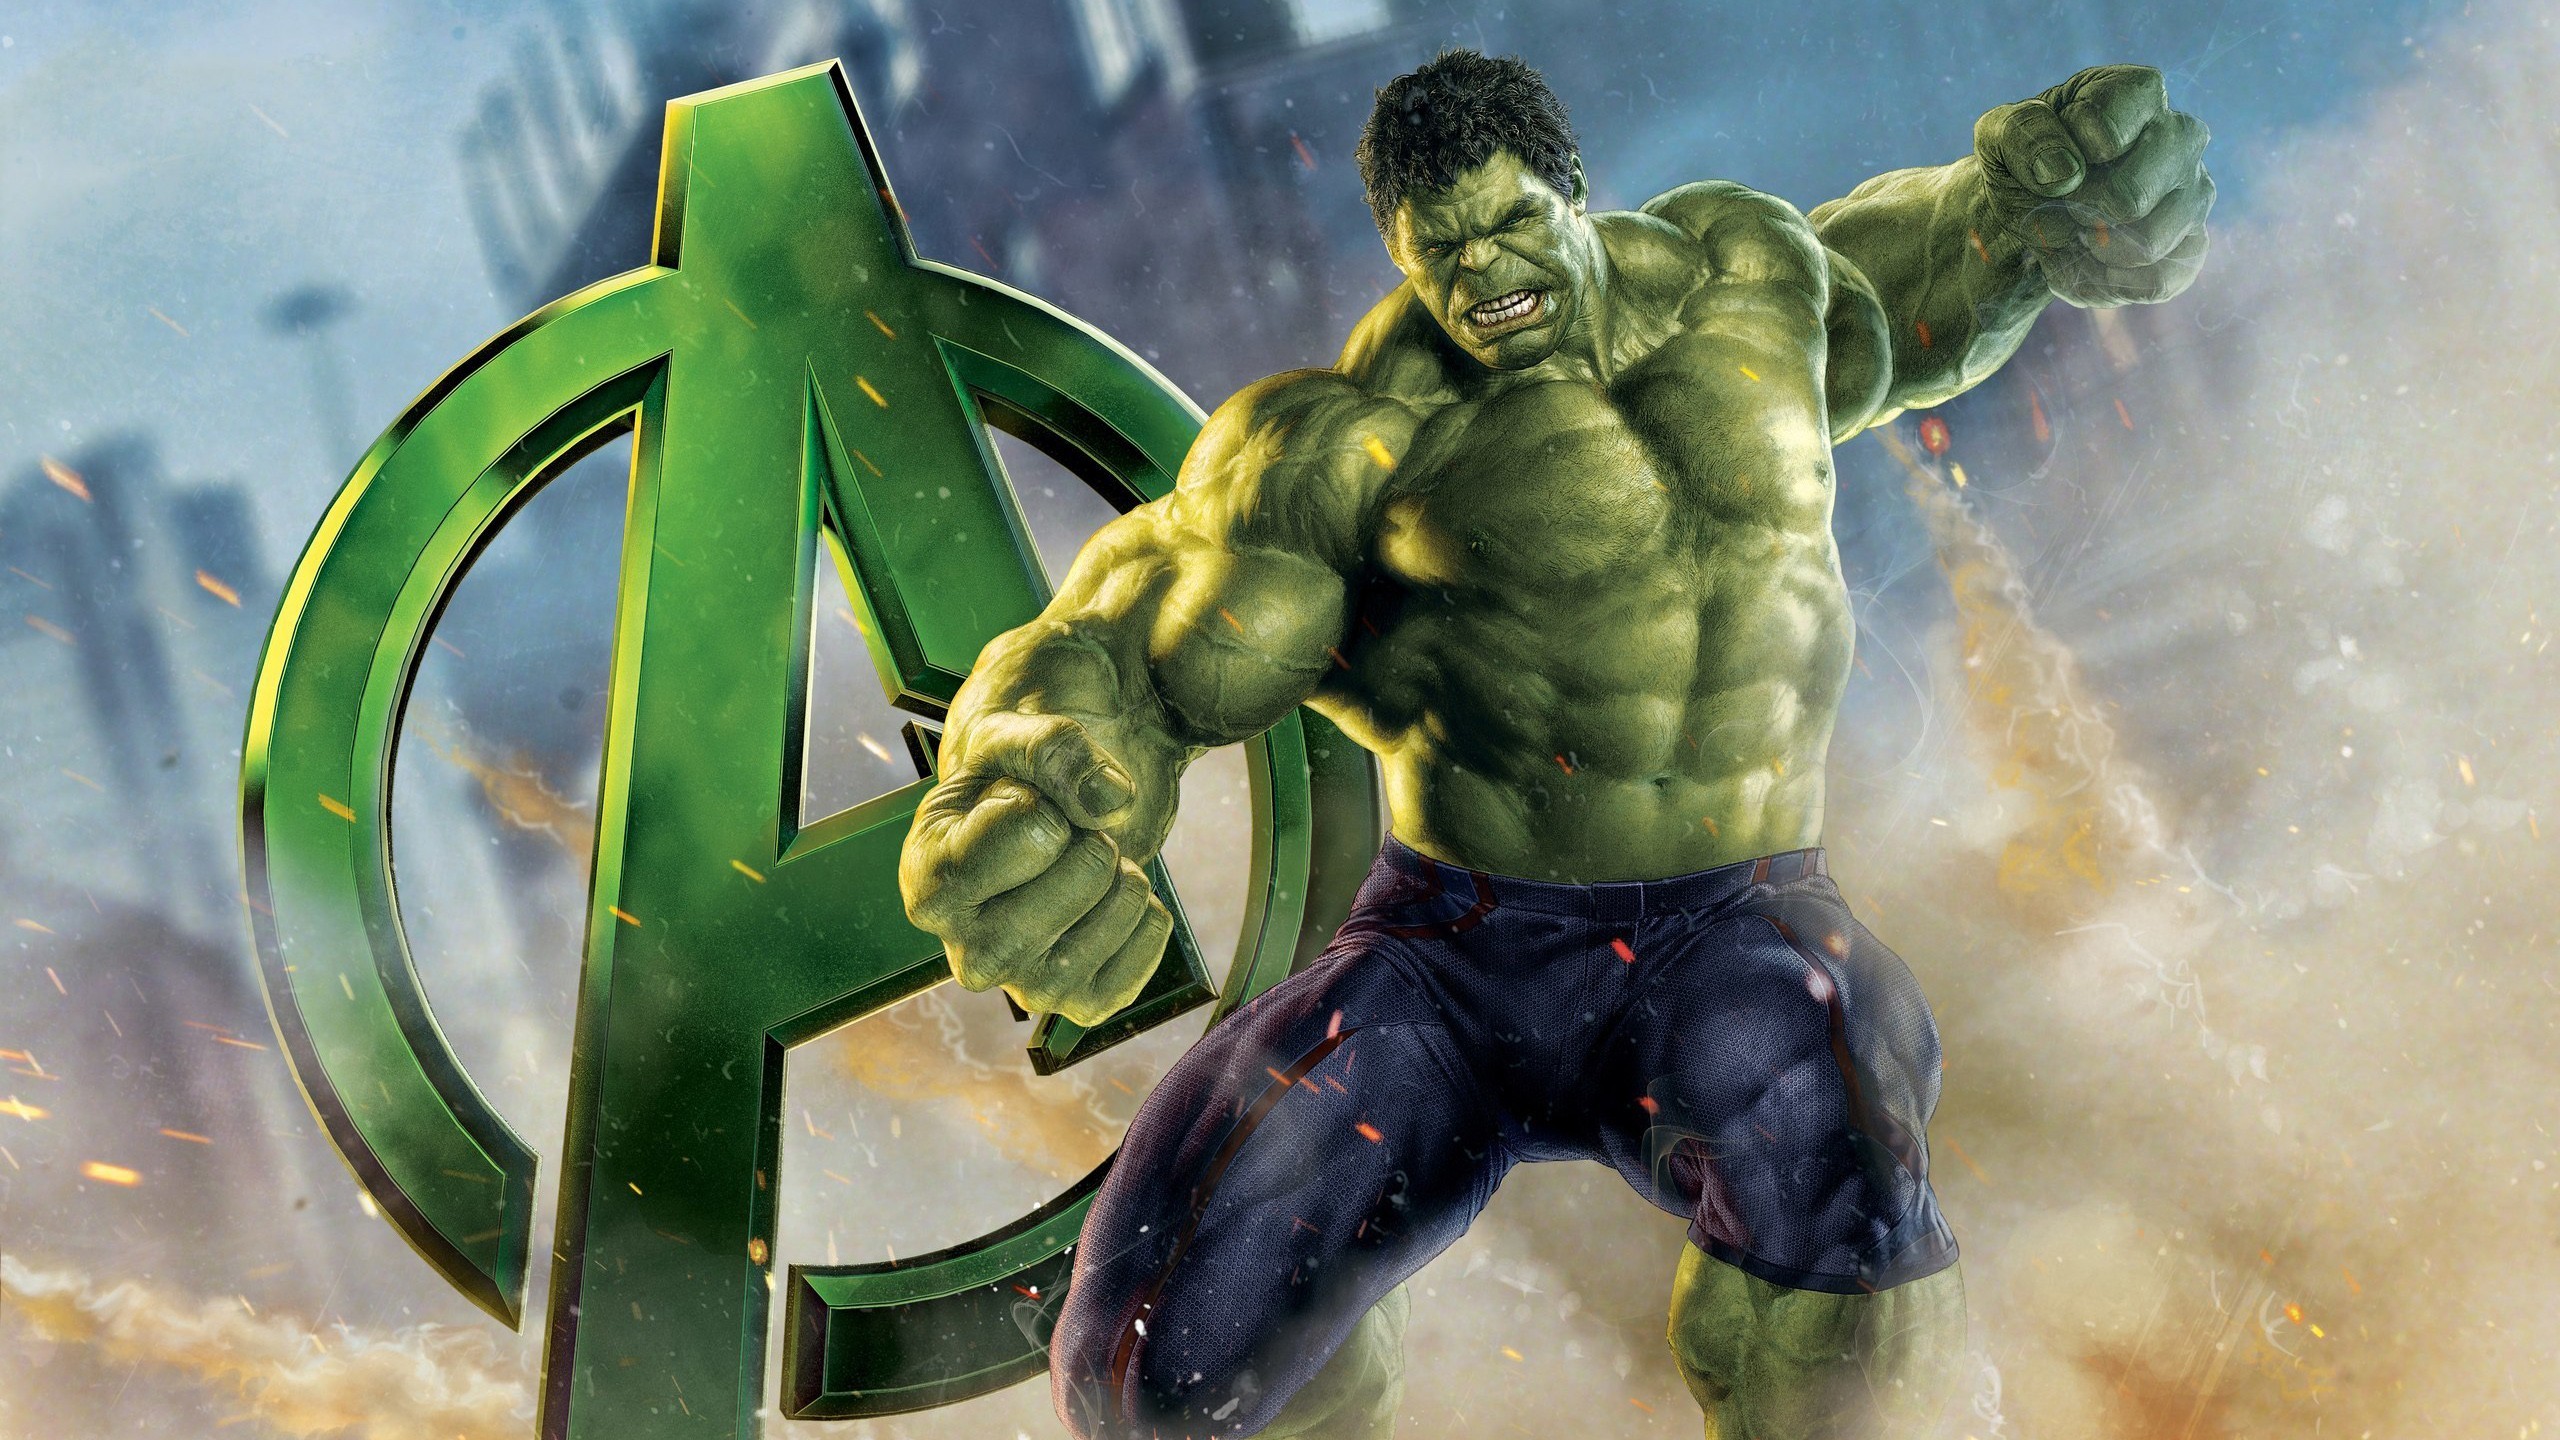 X 1440 Original. Description Download Avengers Hulk Movies wallpaper